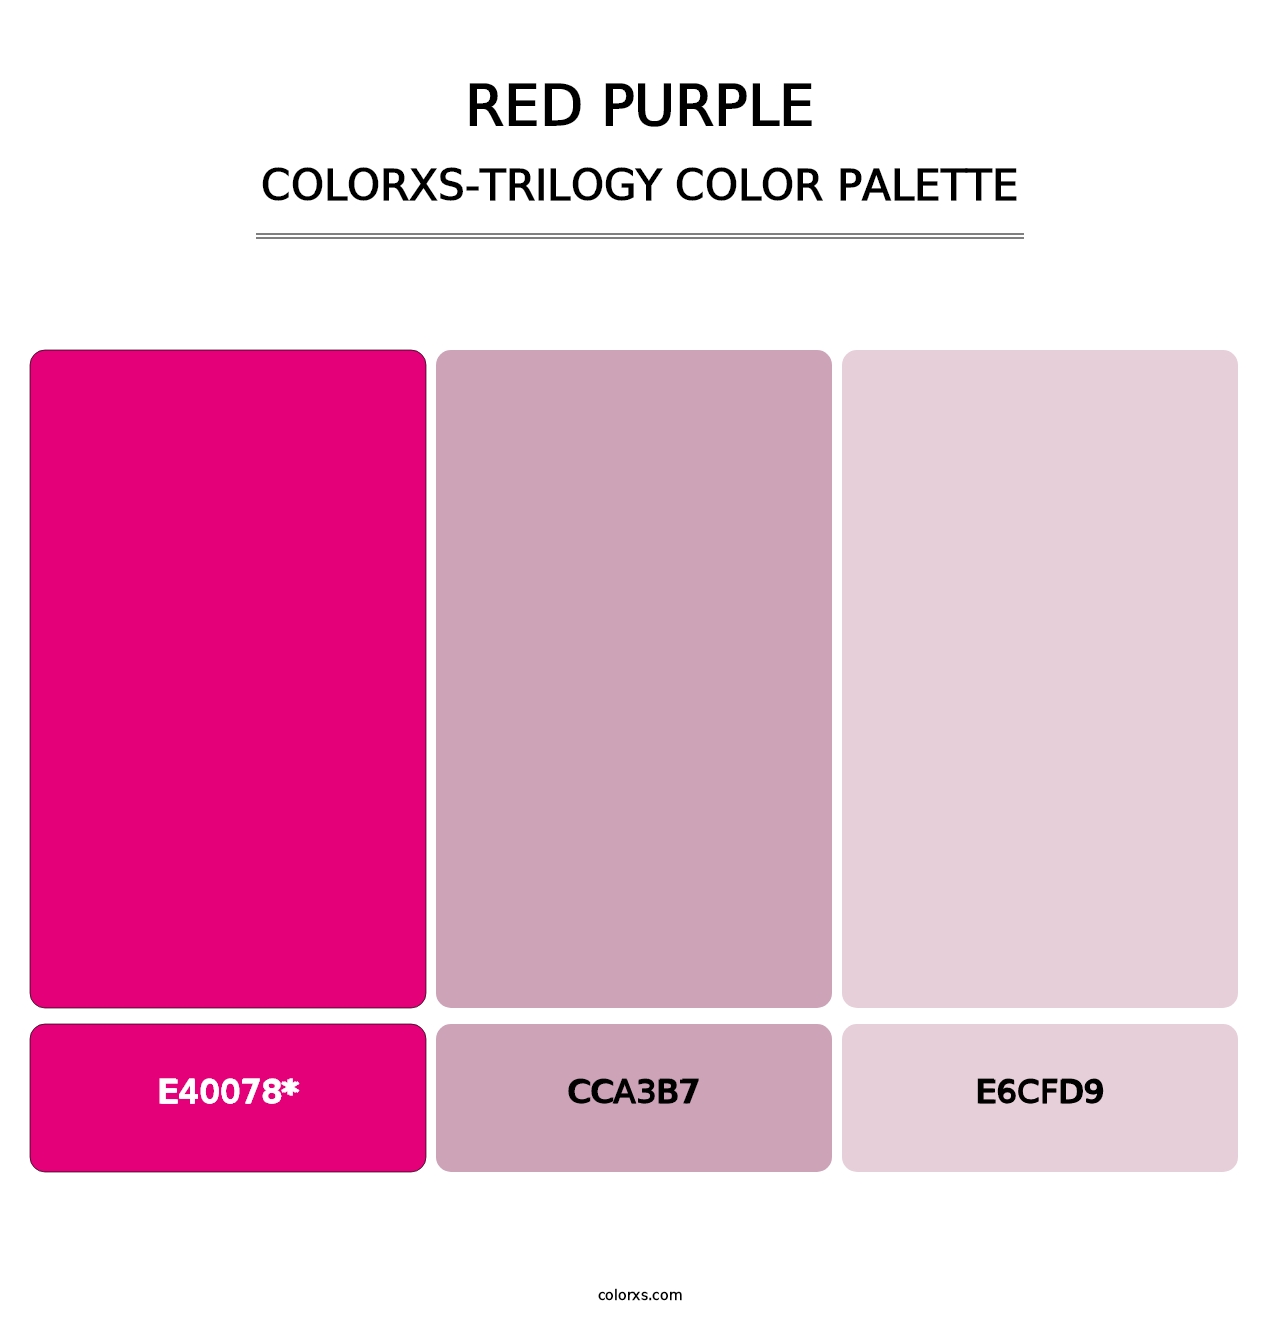 Red Purple - Colorxs Trilogy Palette